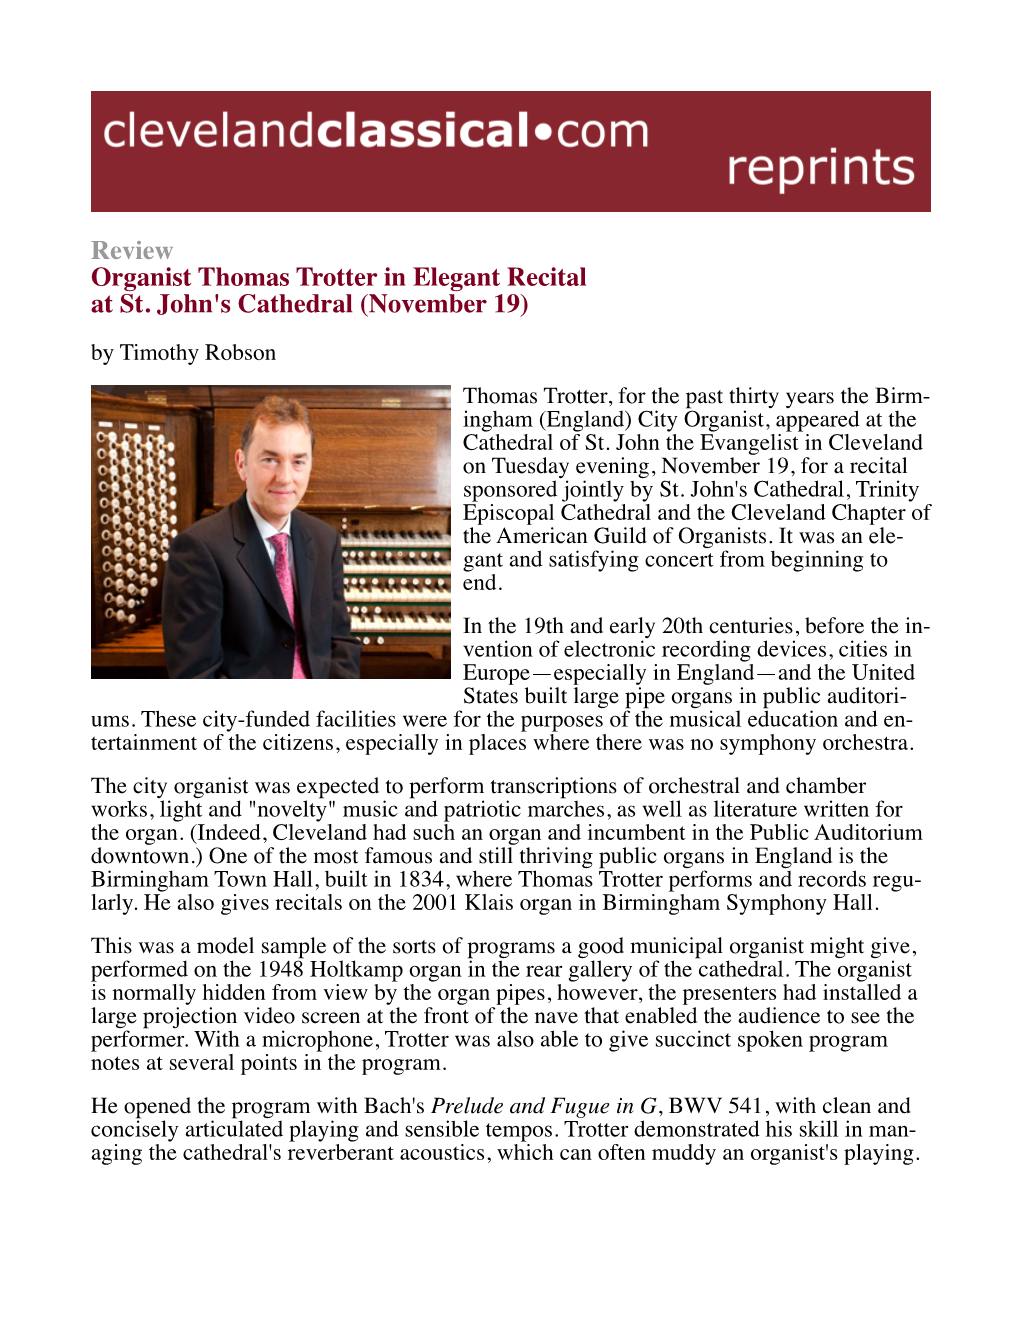 Review Organist Thomas Trotter in Elegant Recital at St